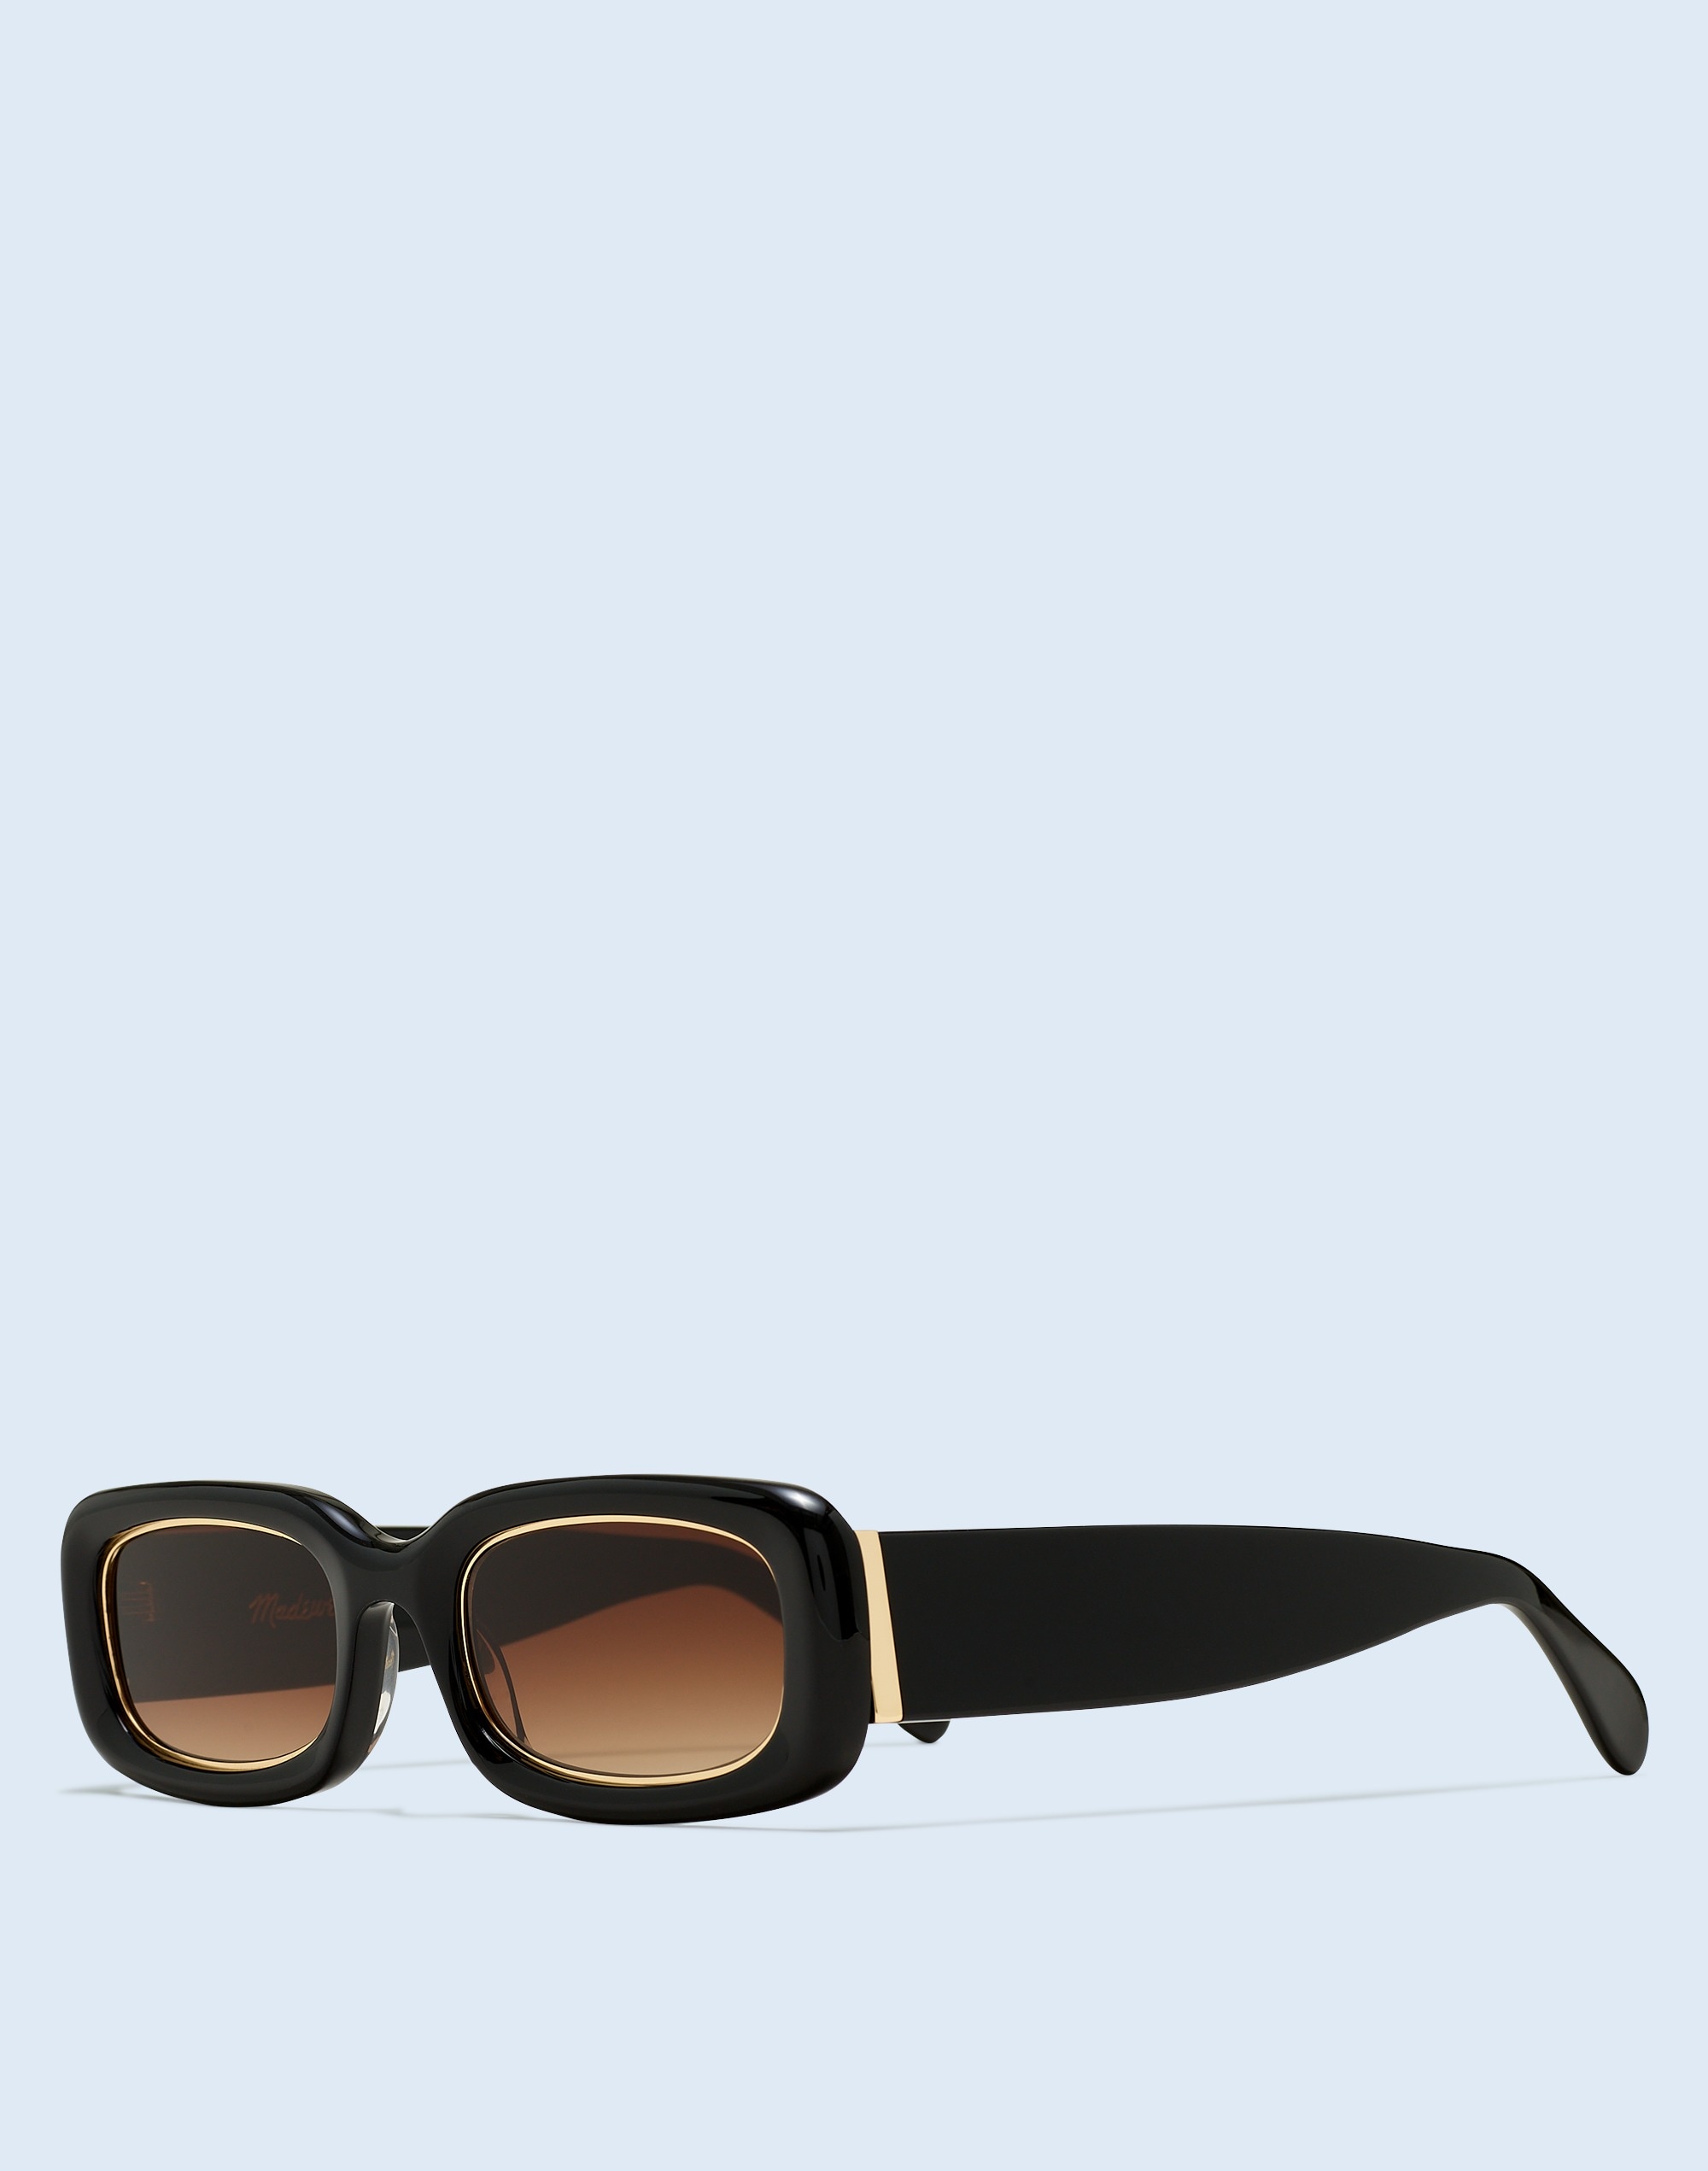 Mw Baymont Square Sunglasses: Metal Accent Edition In True Black